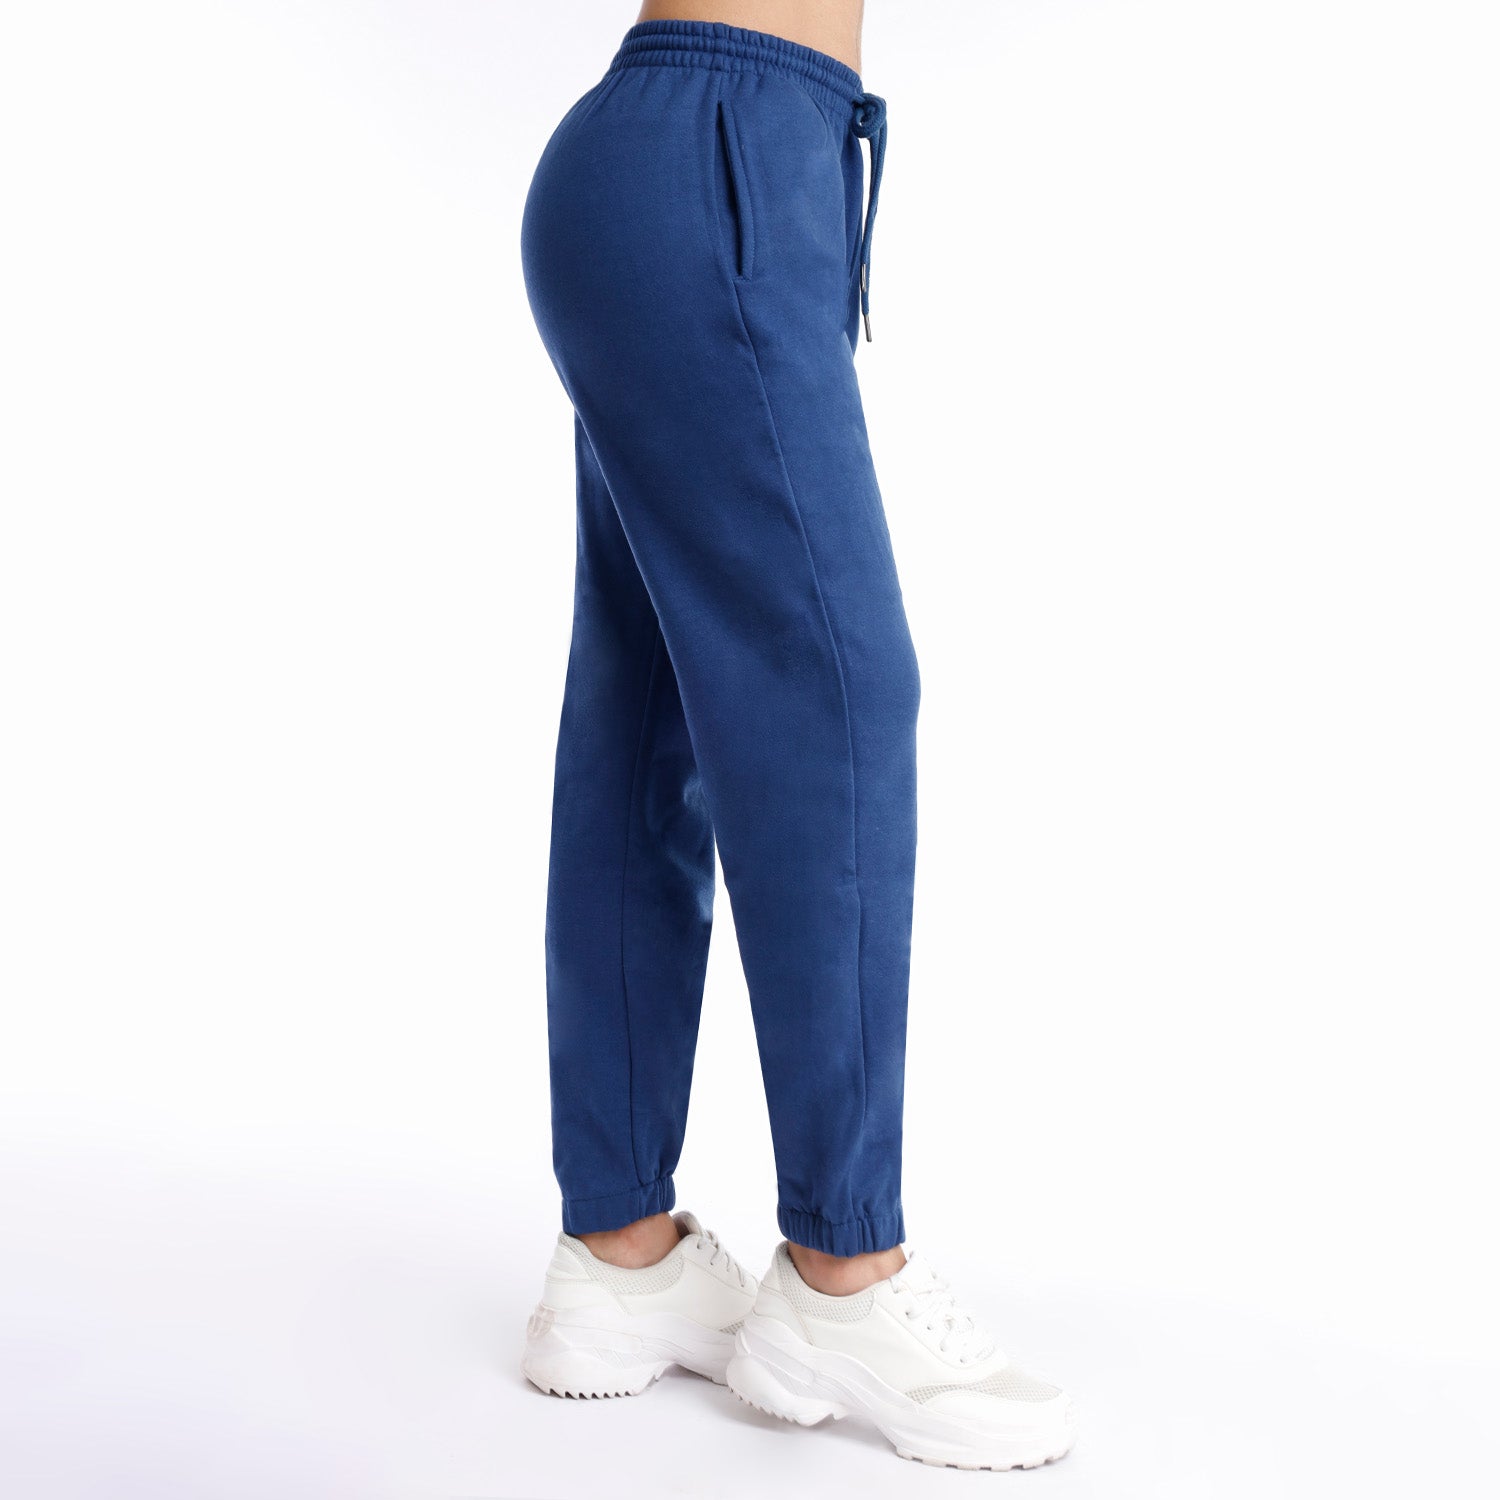 Pantalón jogger de mujer azul marino OZONEE O/802